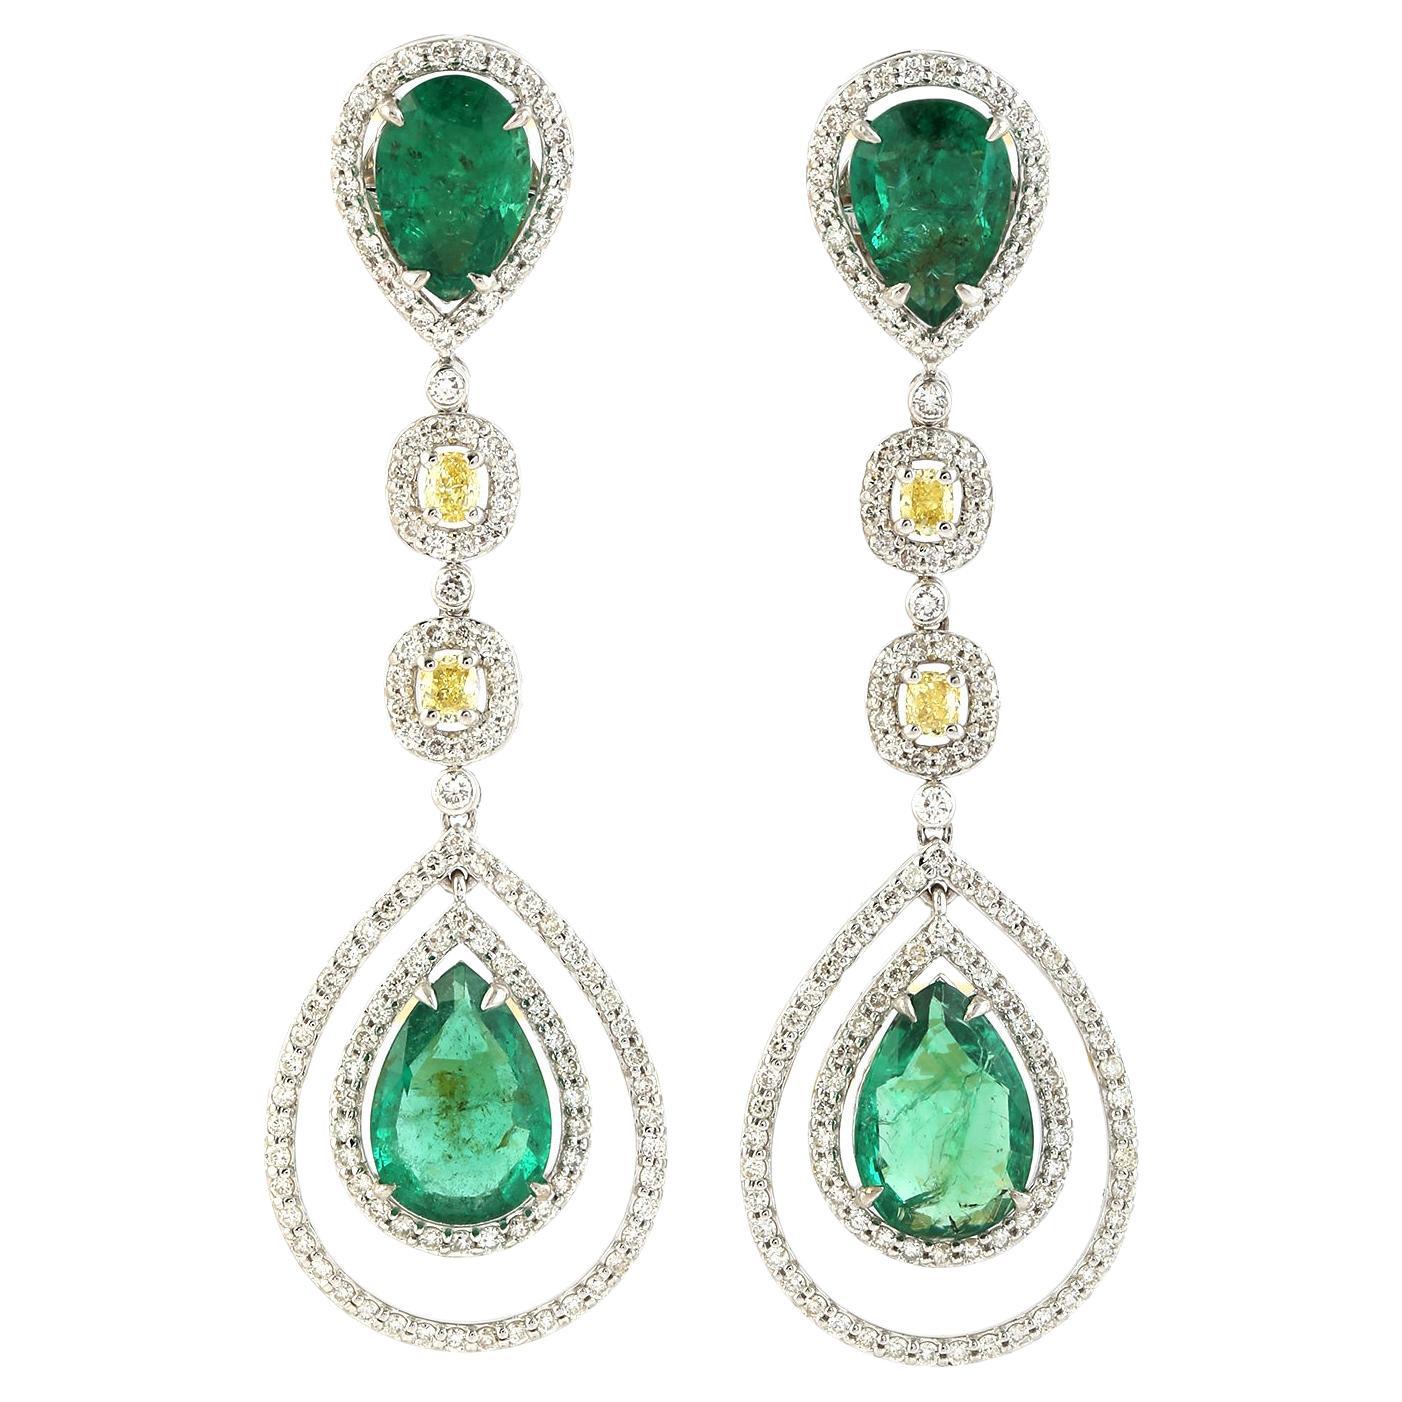 Pear Drops Zambian Emeralds Earrings with Cushion Shaped Yellow Diamonds in 18k For Sale